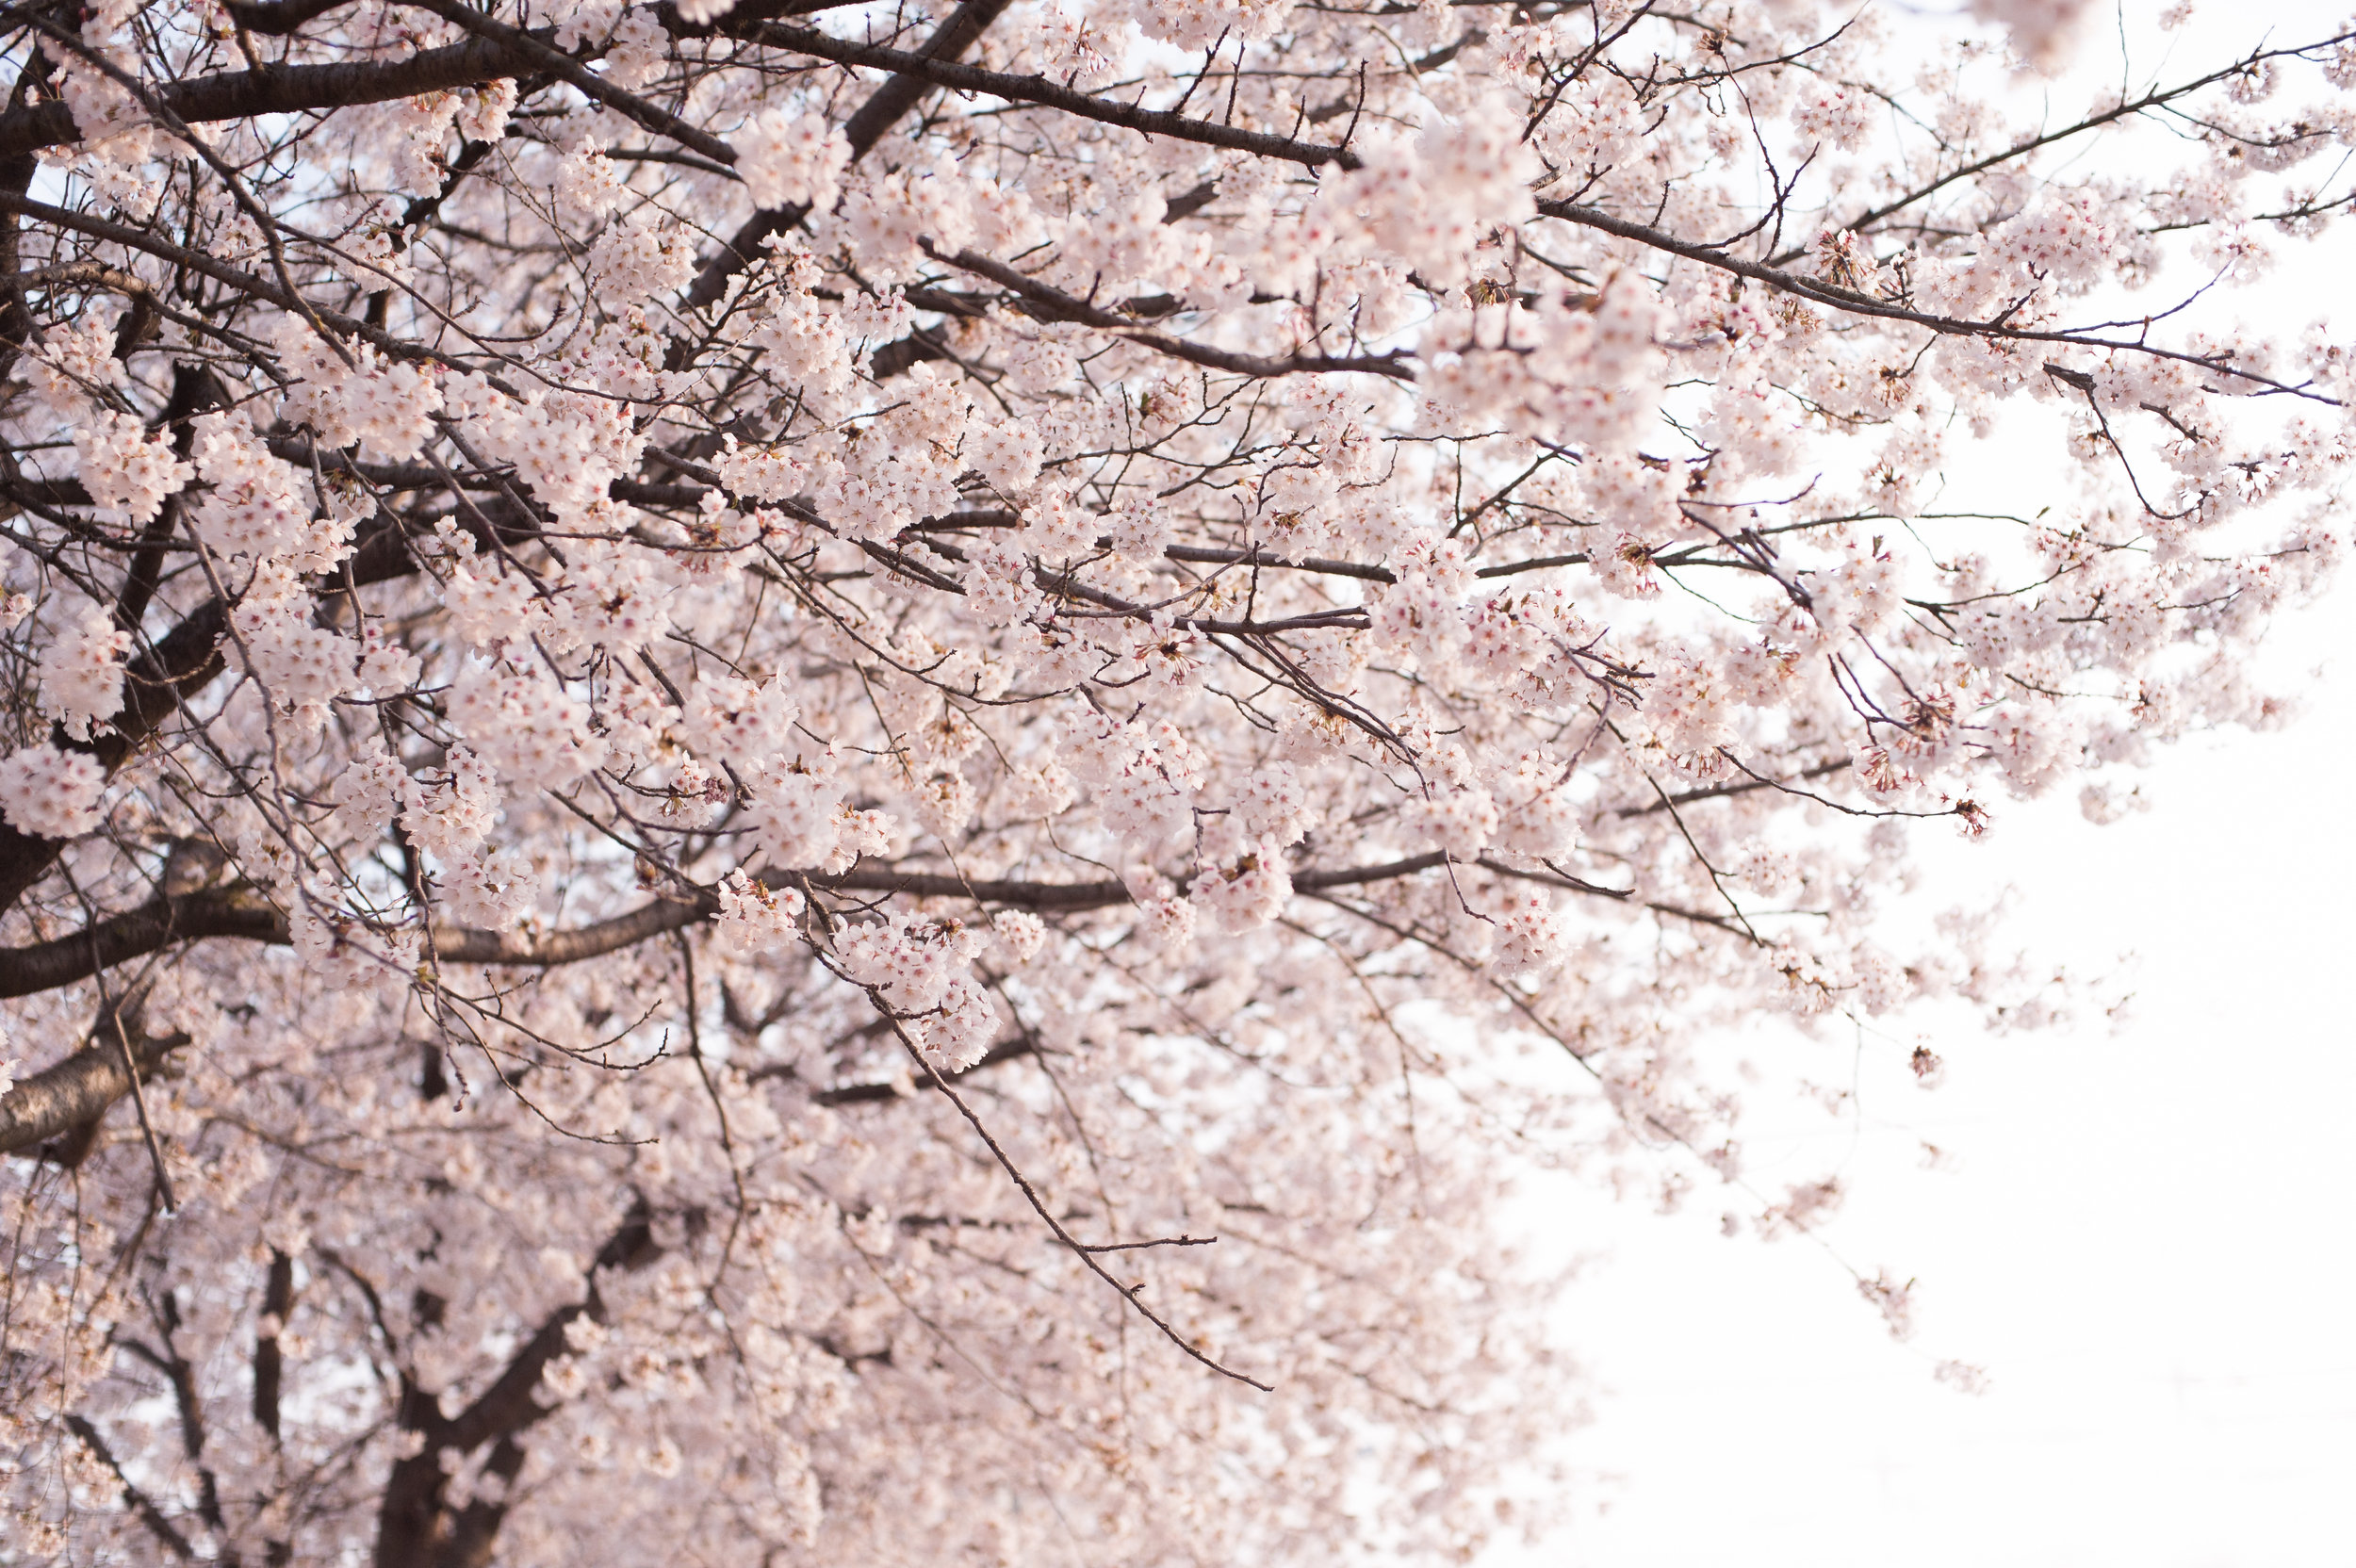 CherryBlossomsSouthKorea (4 of 5).jpg